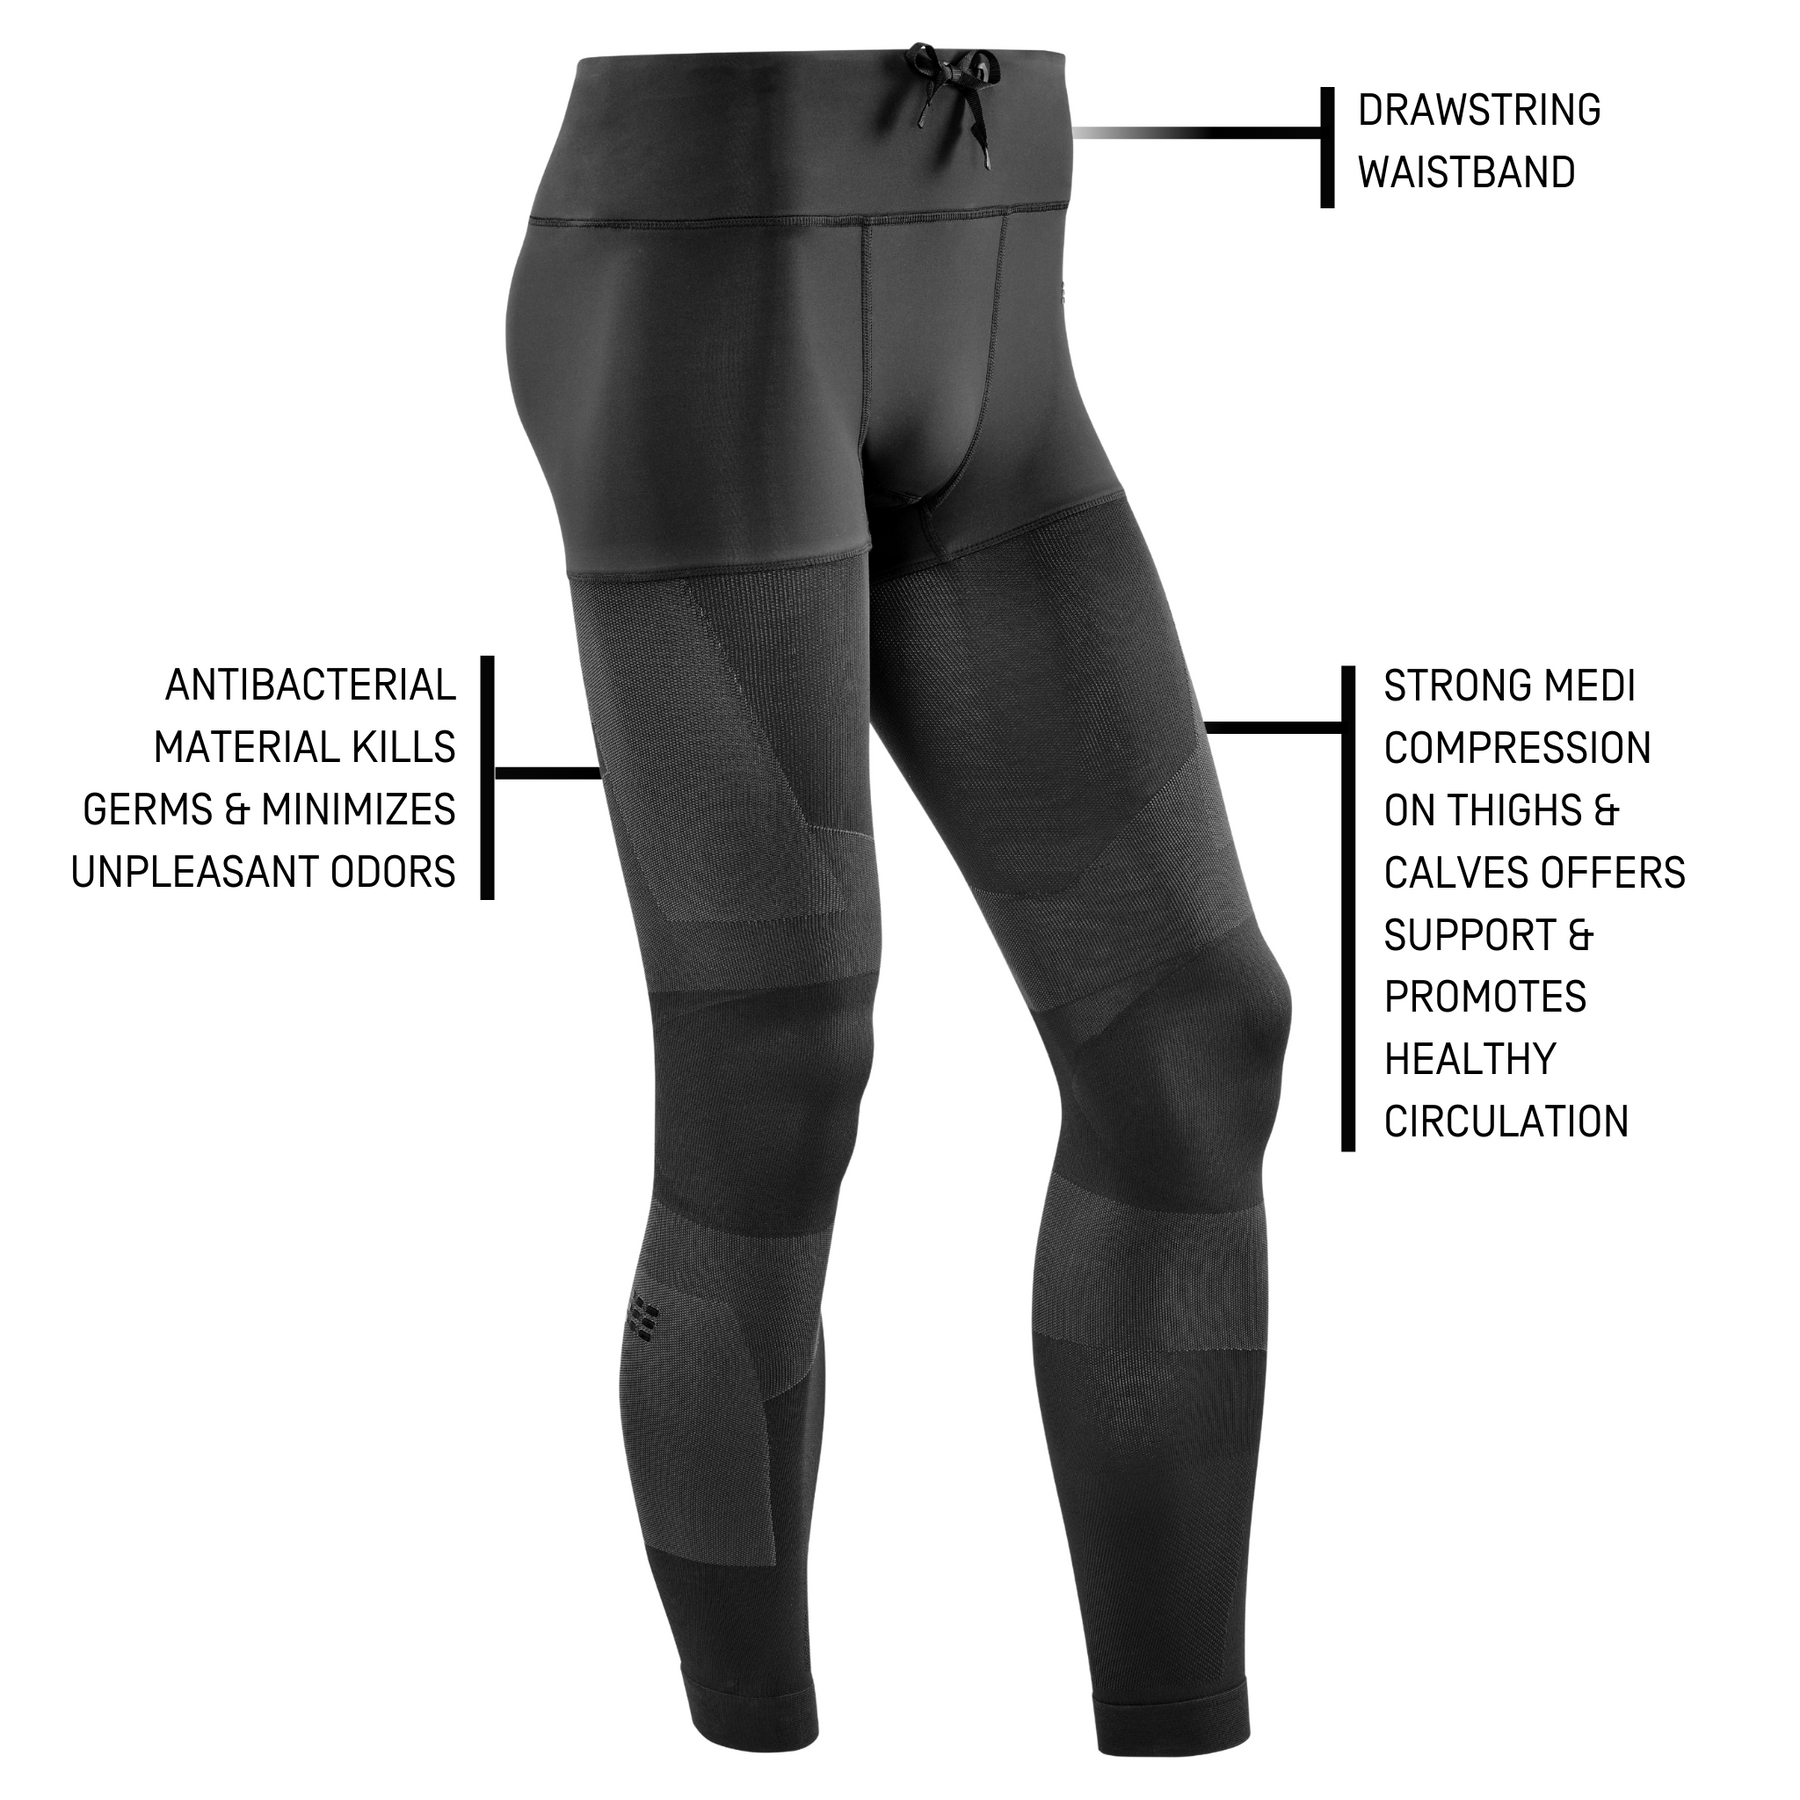 Legging CEP Compression The run - Baselayers - Men's wear